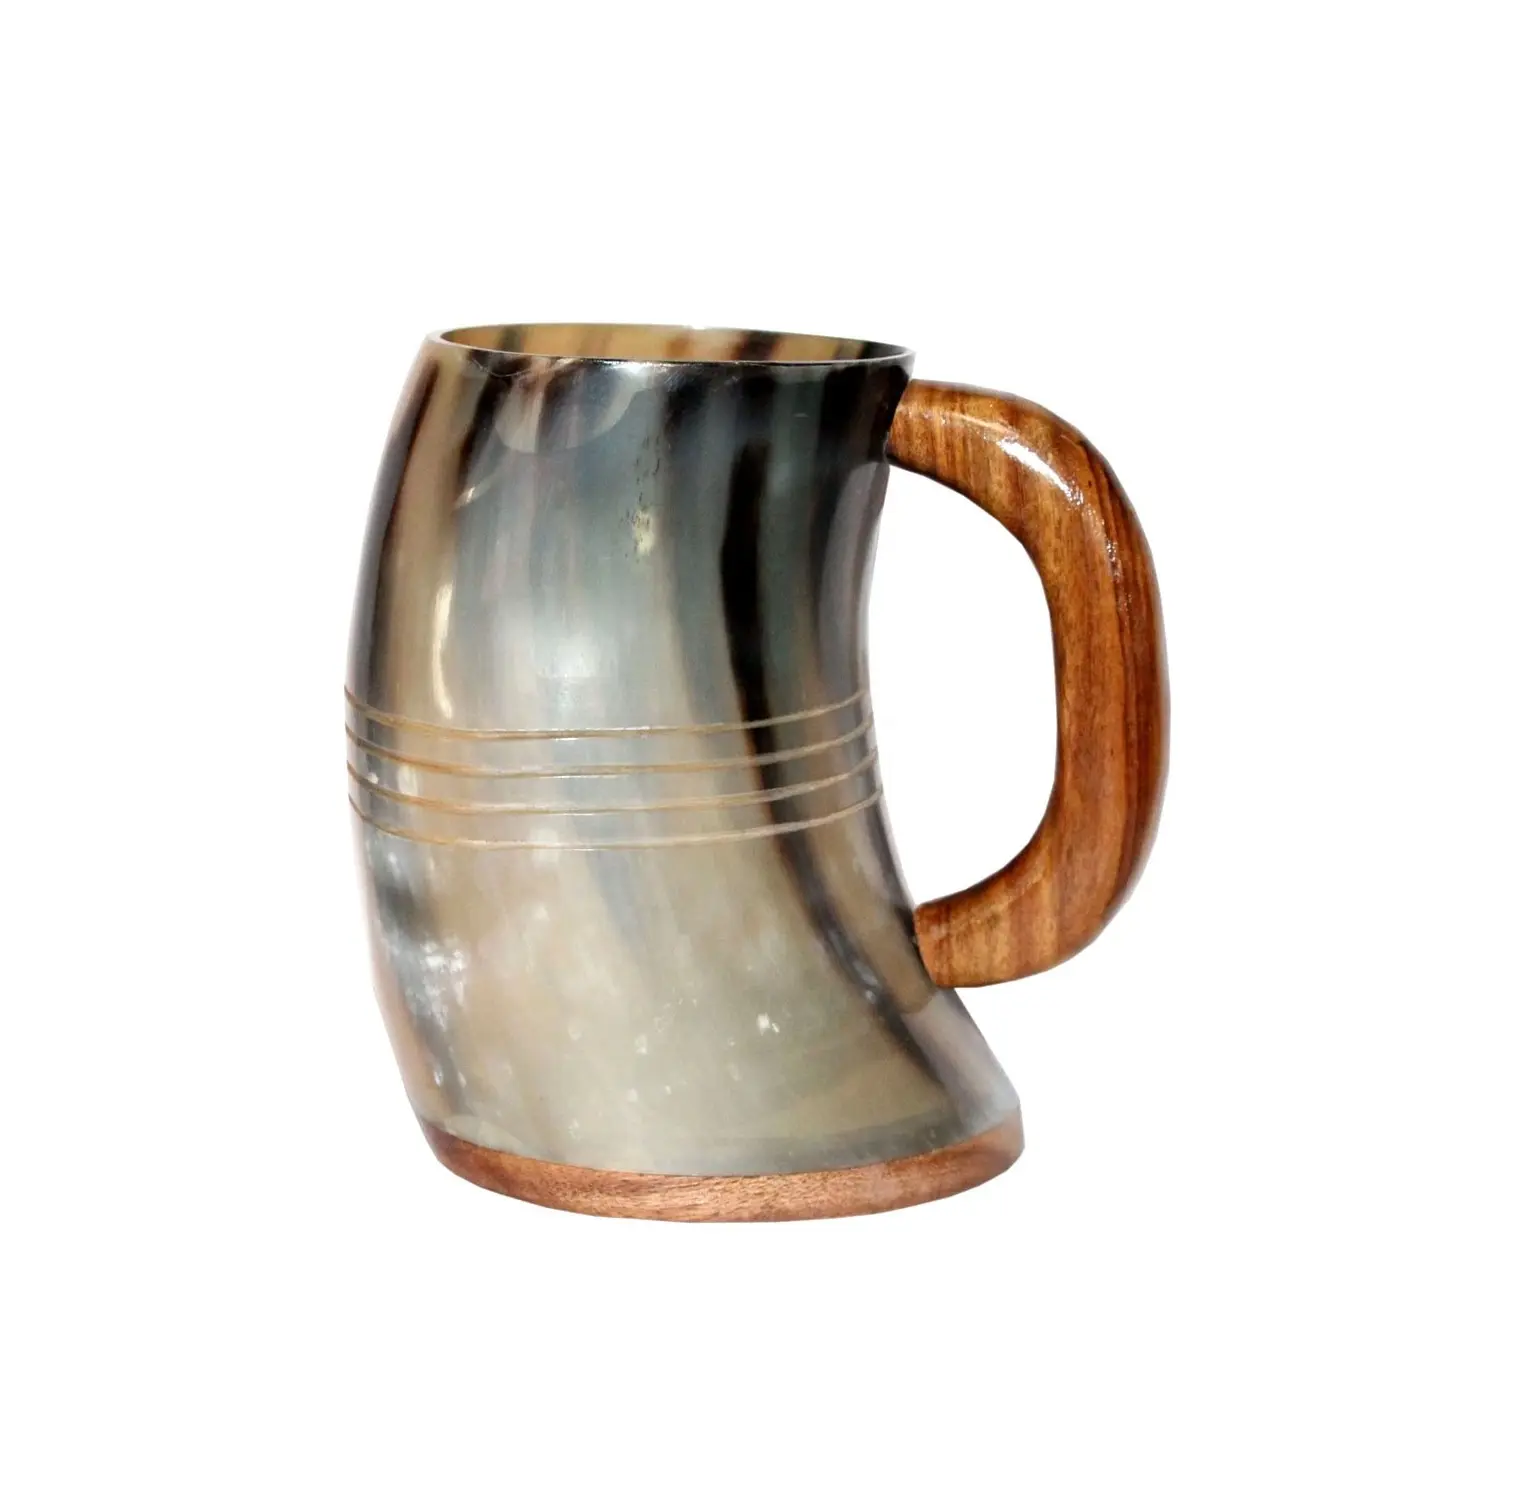 Natural buffalo horn mug viking drinking and beer mug hot quality with wood hand grip best selling